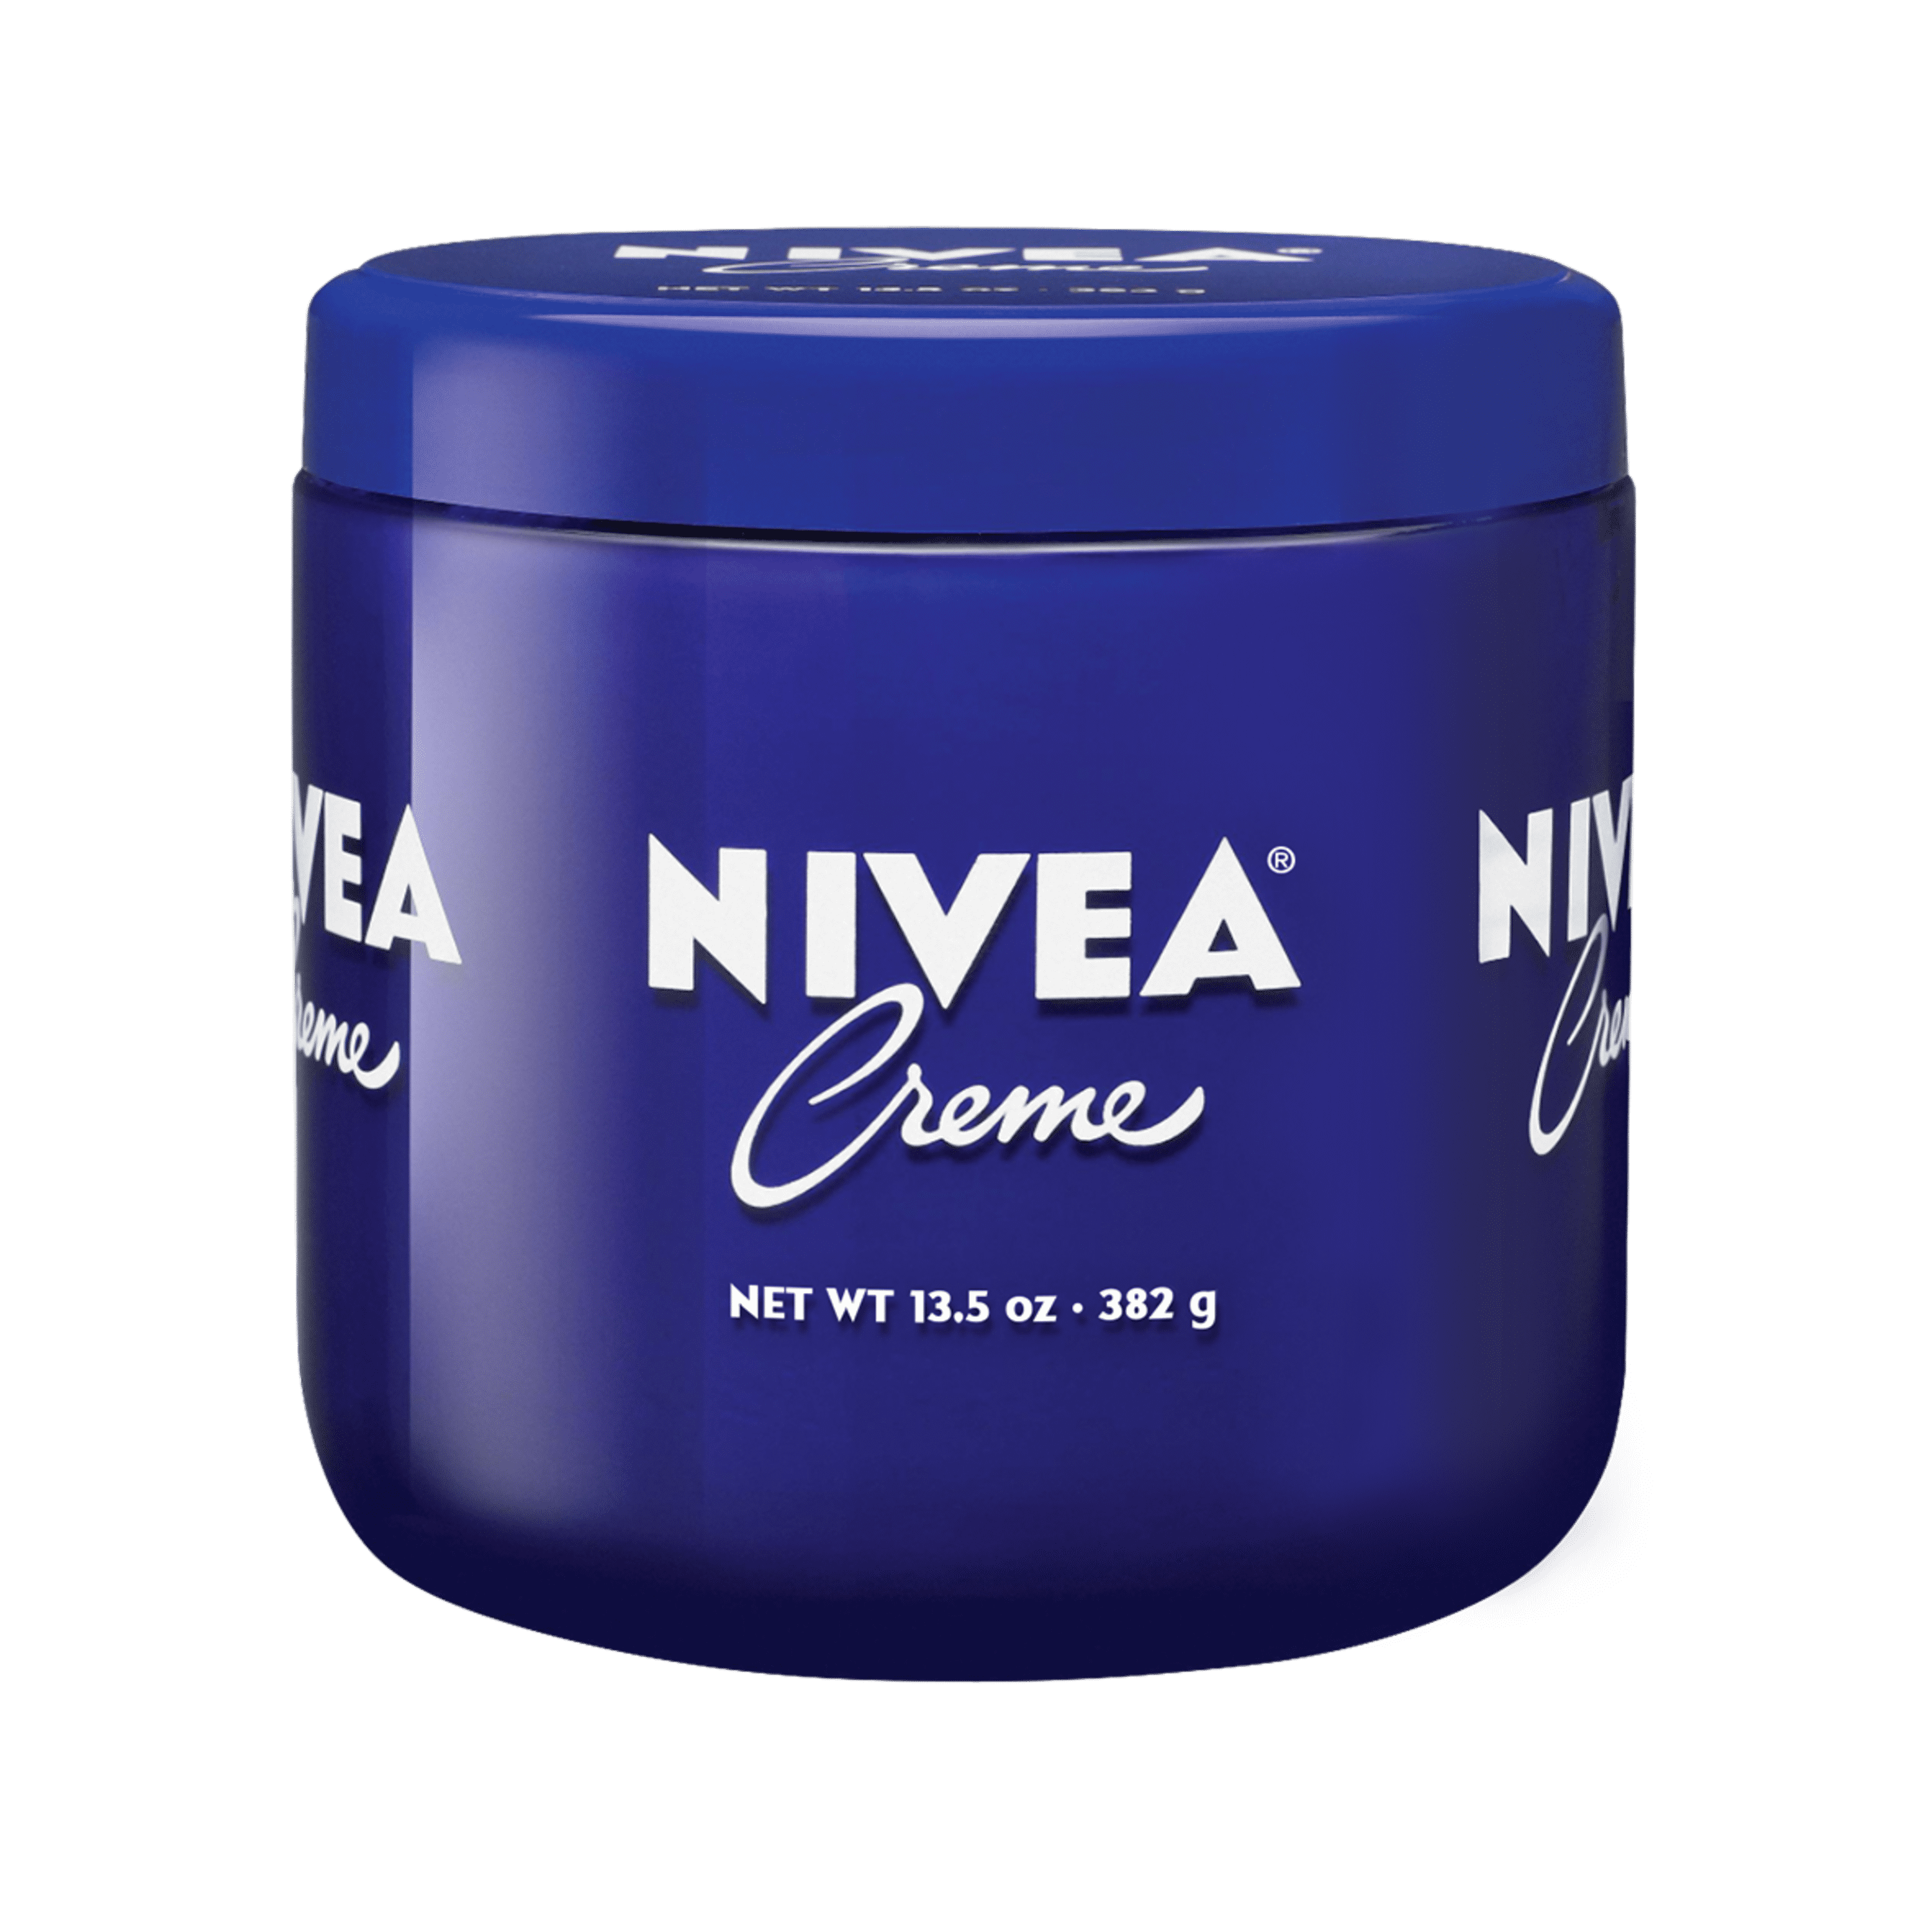 NIVEA Creme Body, Face and Hand Moisturizing Cream, 13.5 Oz Jar